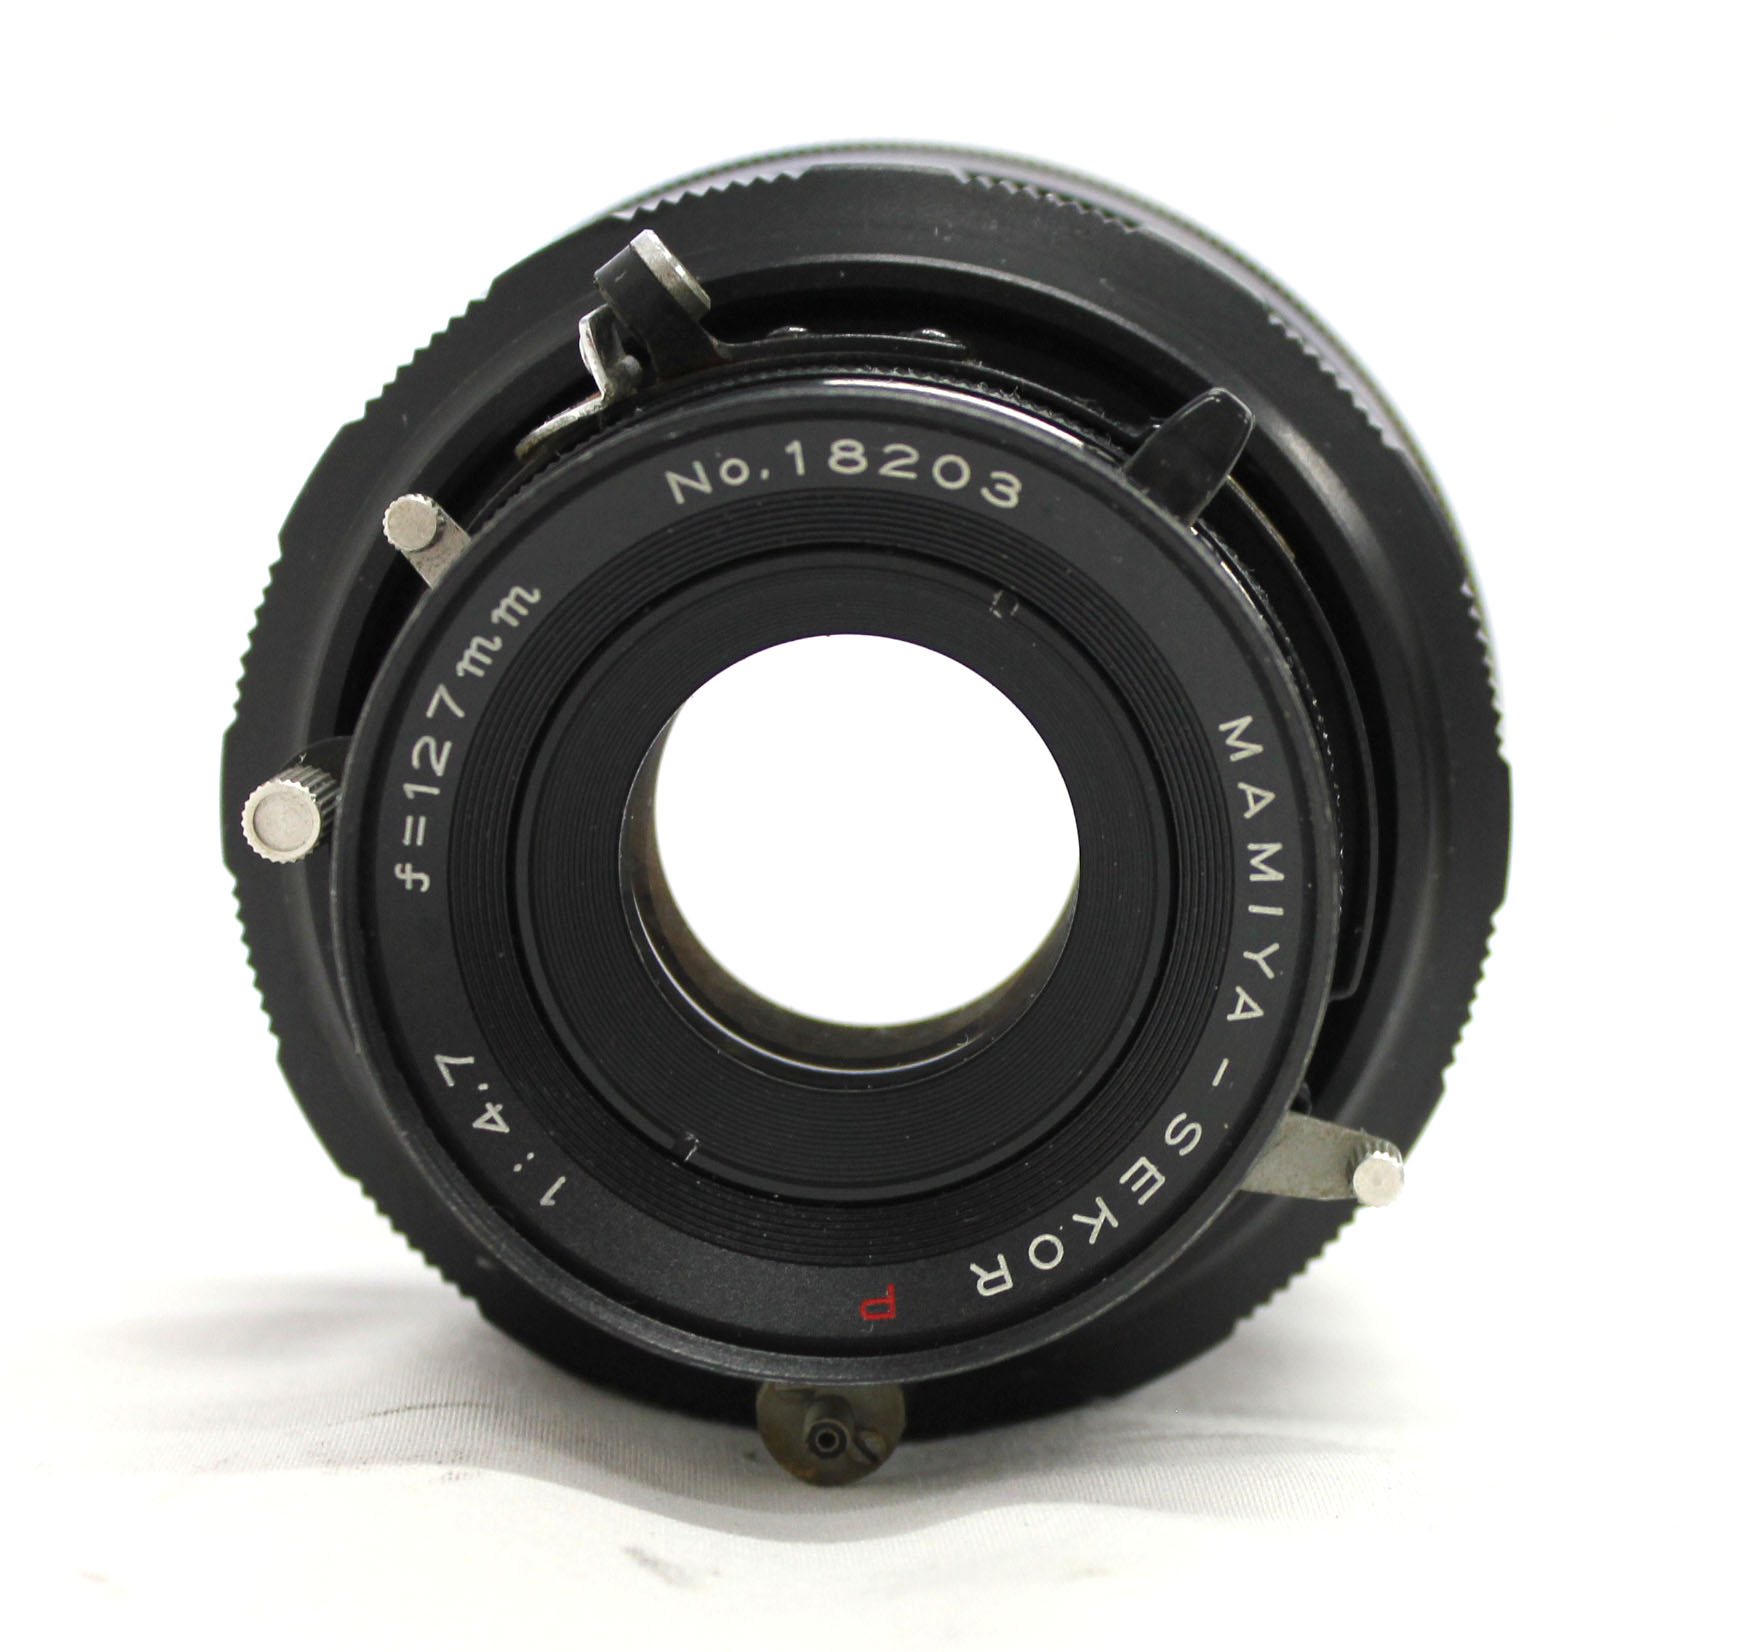  Mamiya-Sekor P 127mm F/4.7 Lens for Universal Press Super 23 from Japan Photo 5